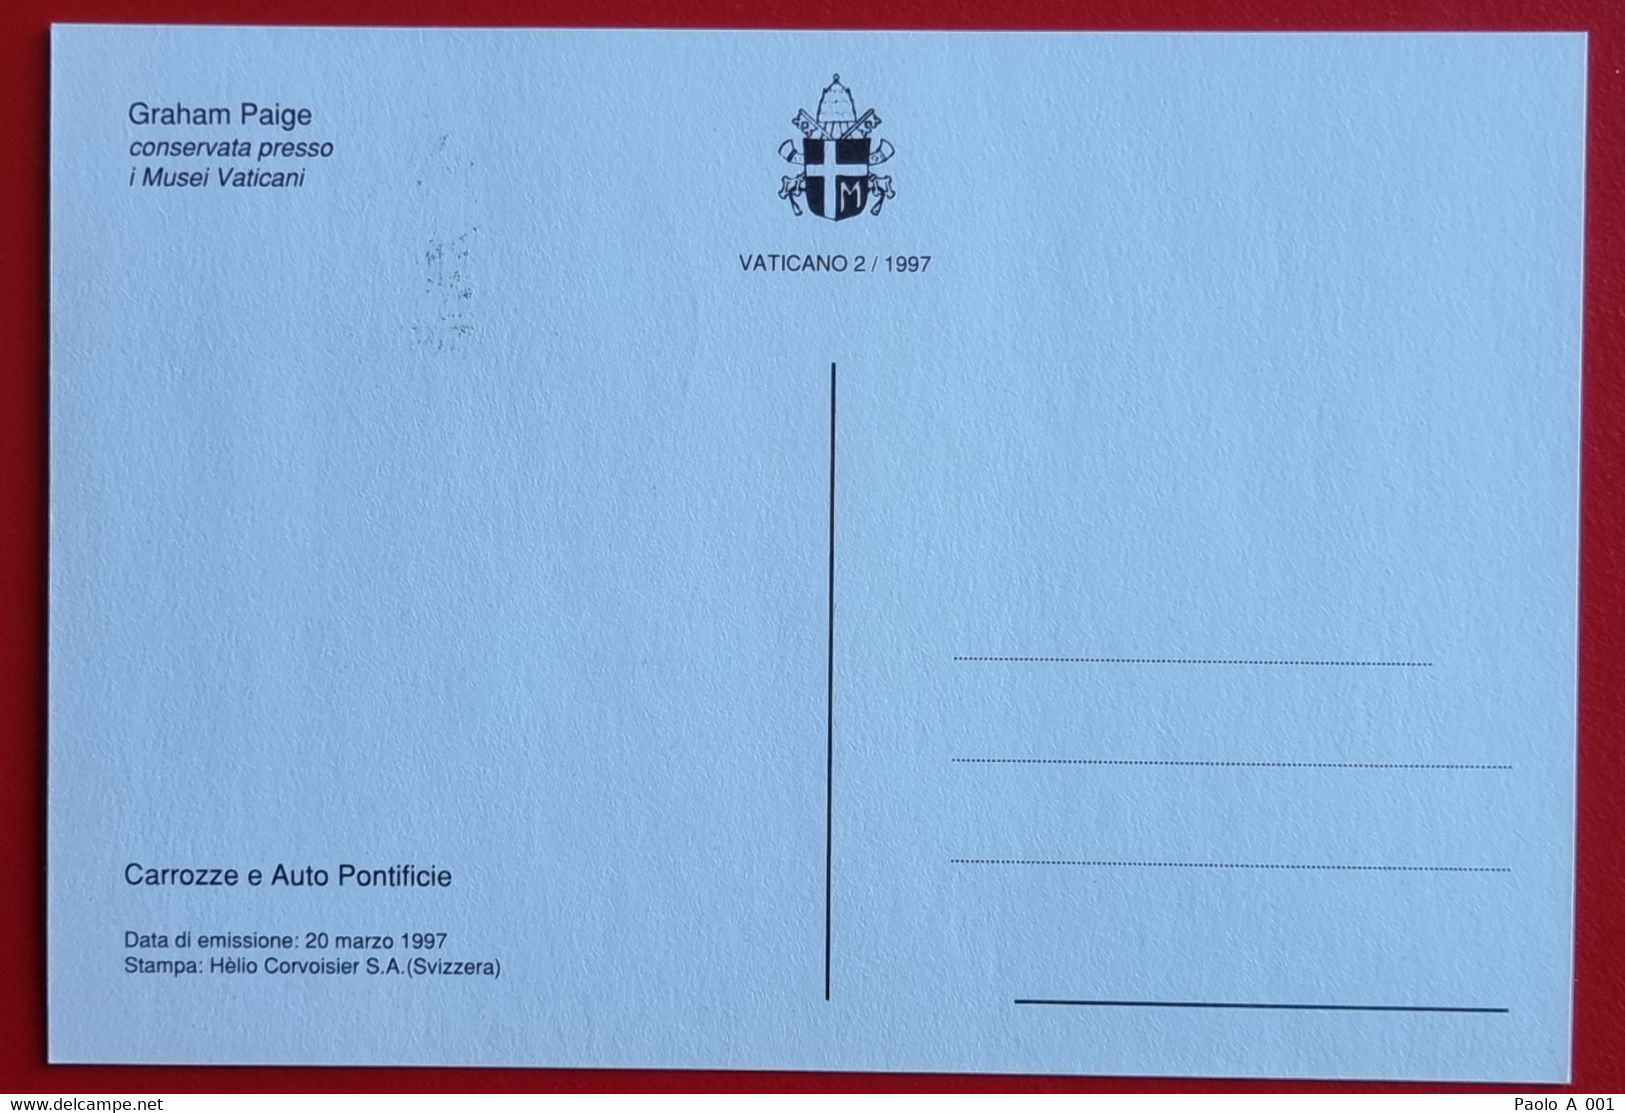 VATICANO VATIKAN VATICAN 1997 CAROZZE AUTO PONTIFICE POPE COACH CARS LIMOUSINE MAXIMUM-CARD GRAHAM PAIGE - Briefe U. Dokumente